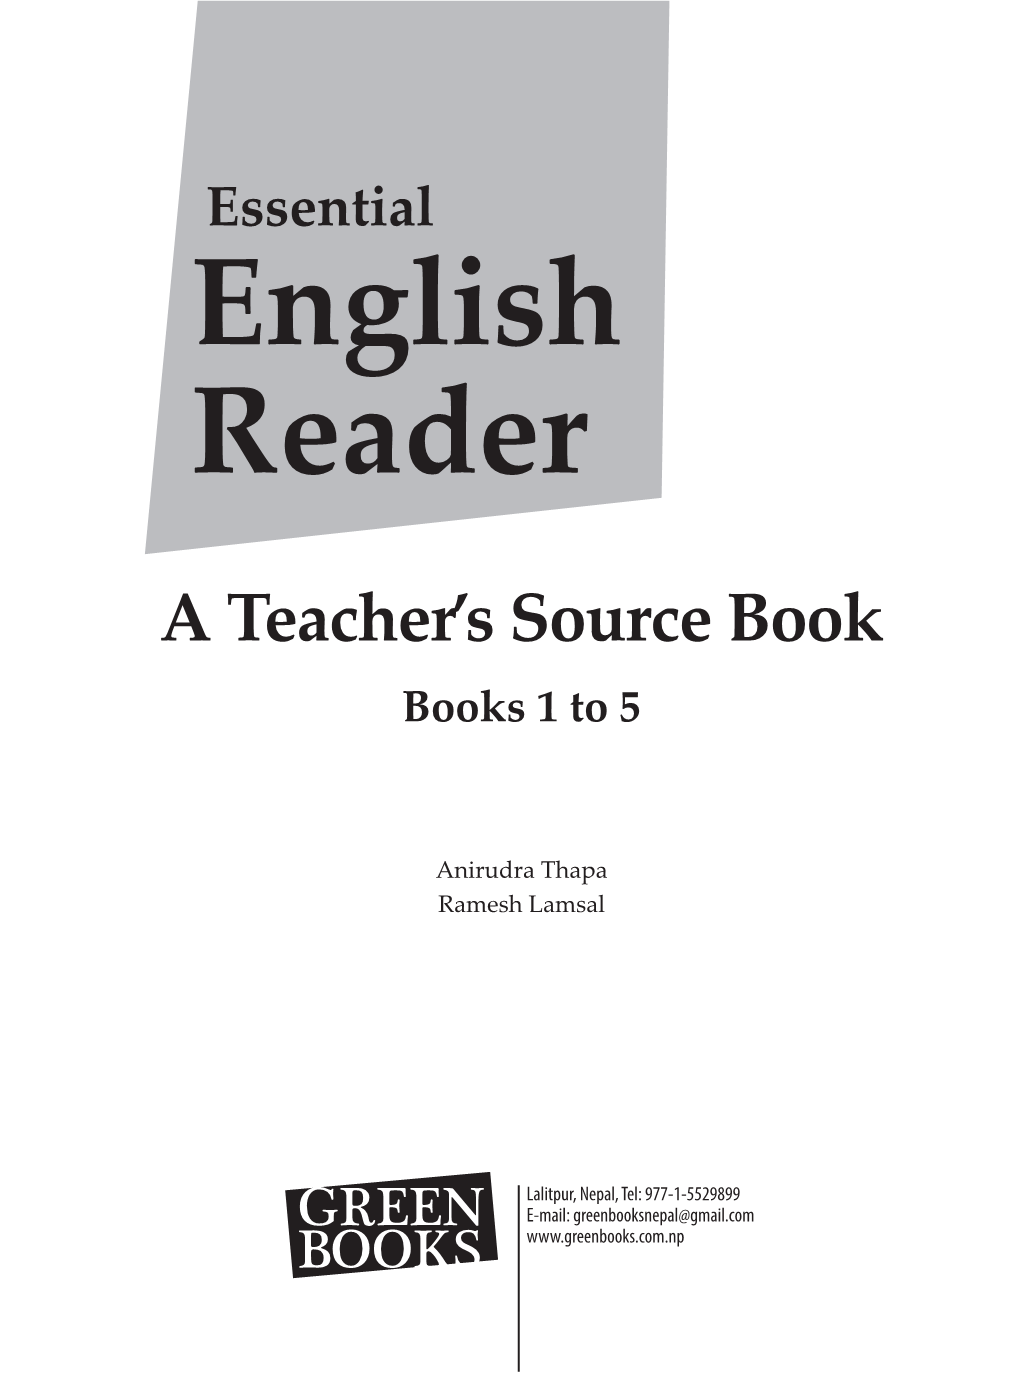 Essential English Reader